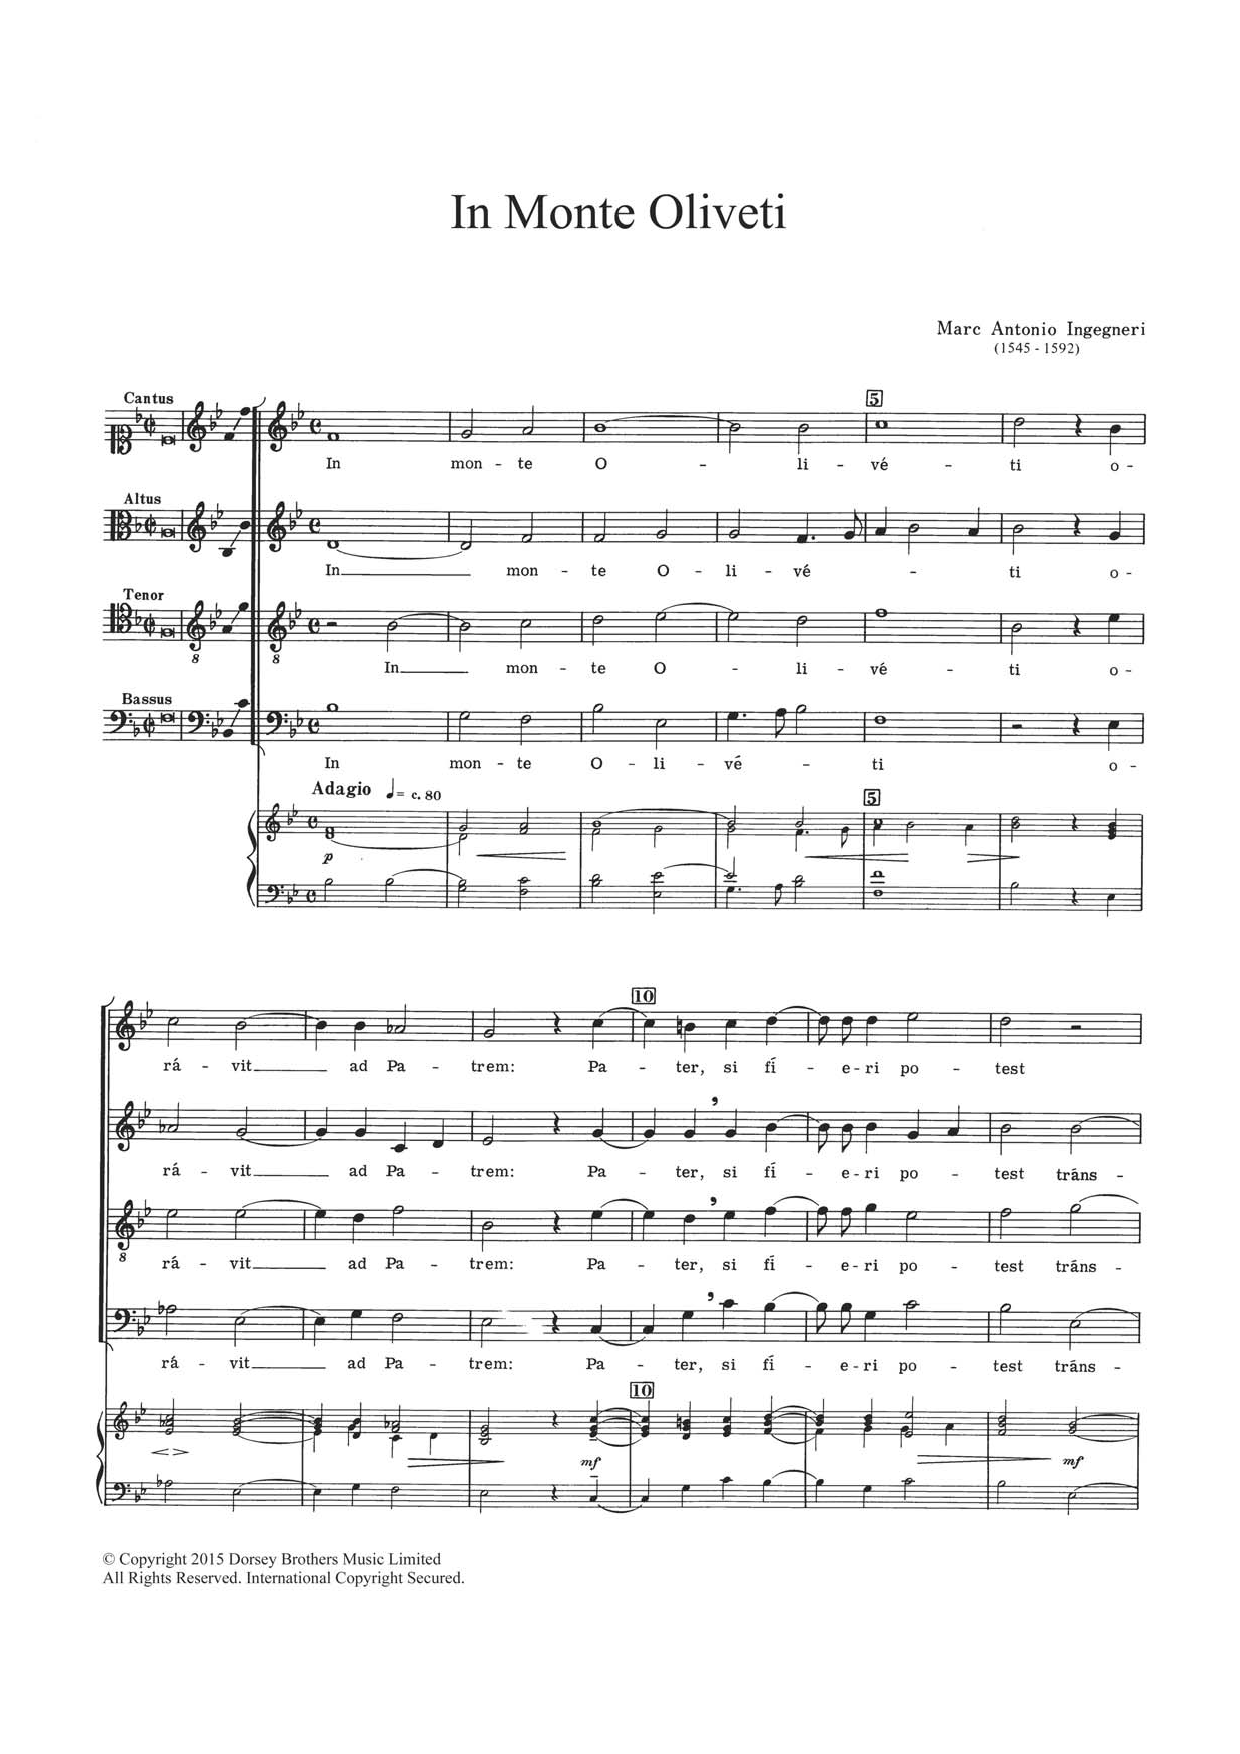 Marc Antonio Ingegneri In Monte Oliveti Sheet Music Notes & Chords for Choir - Download or Print PDF